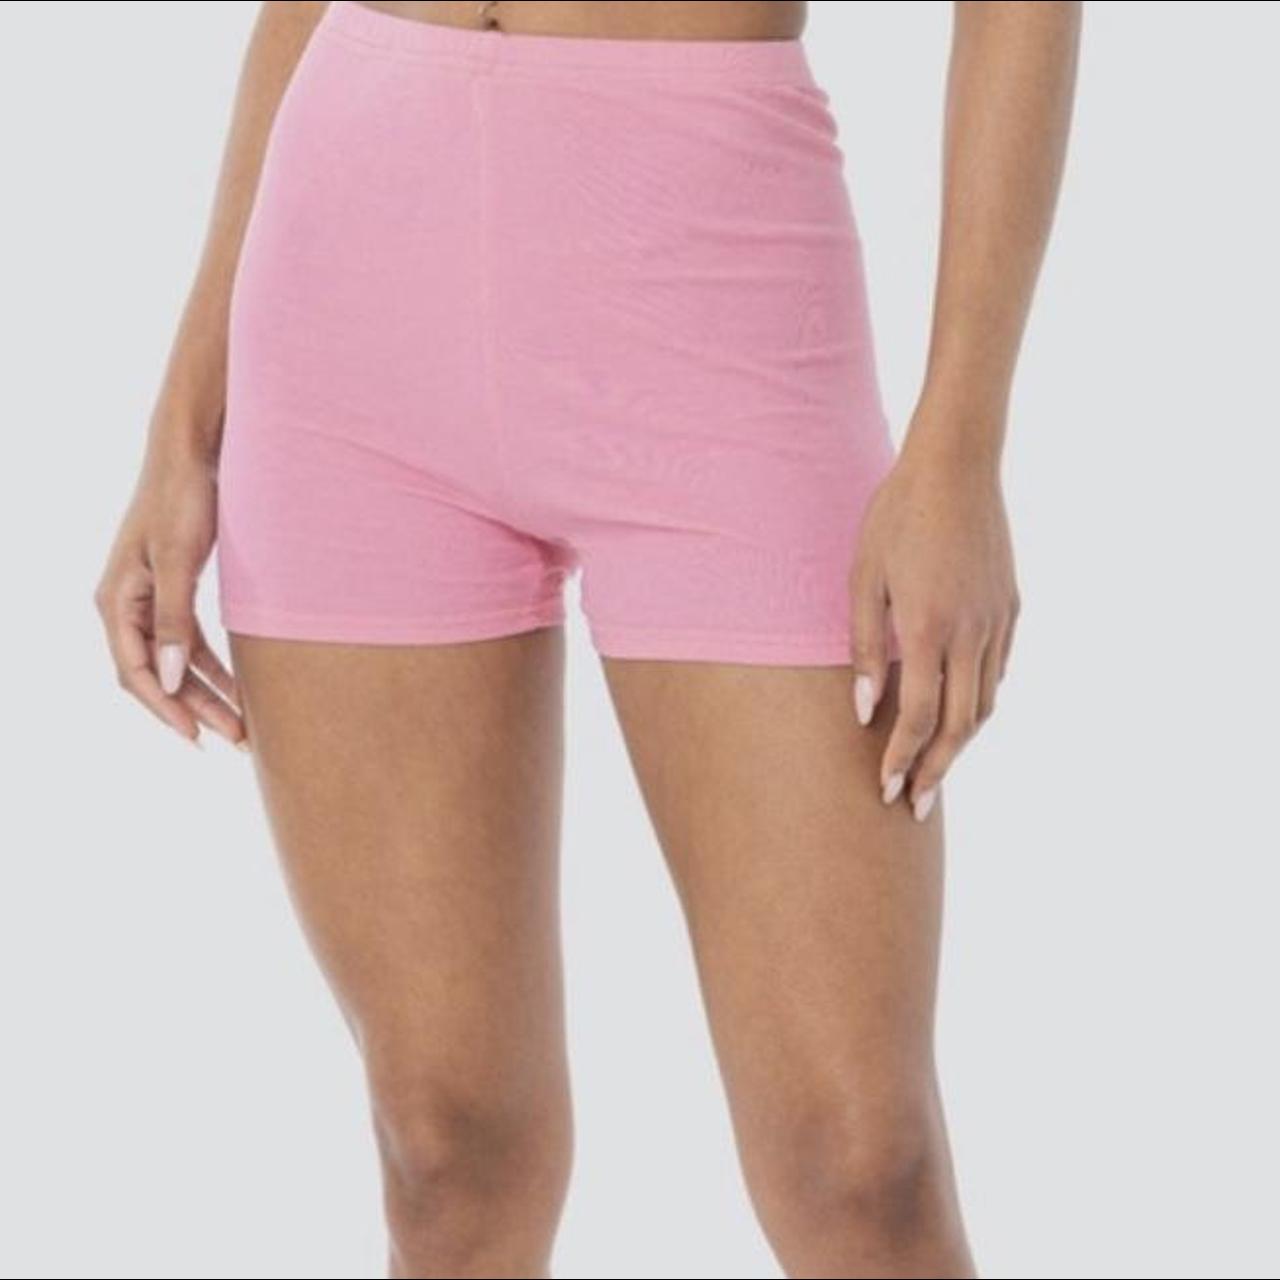 EDIKTED pink biker shorts perfect for summer so - Depop